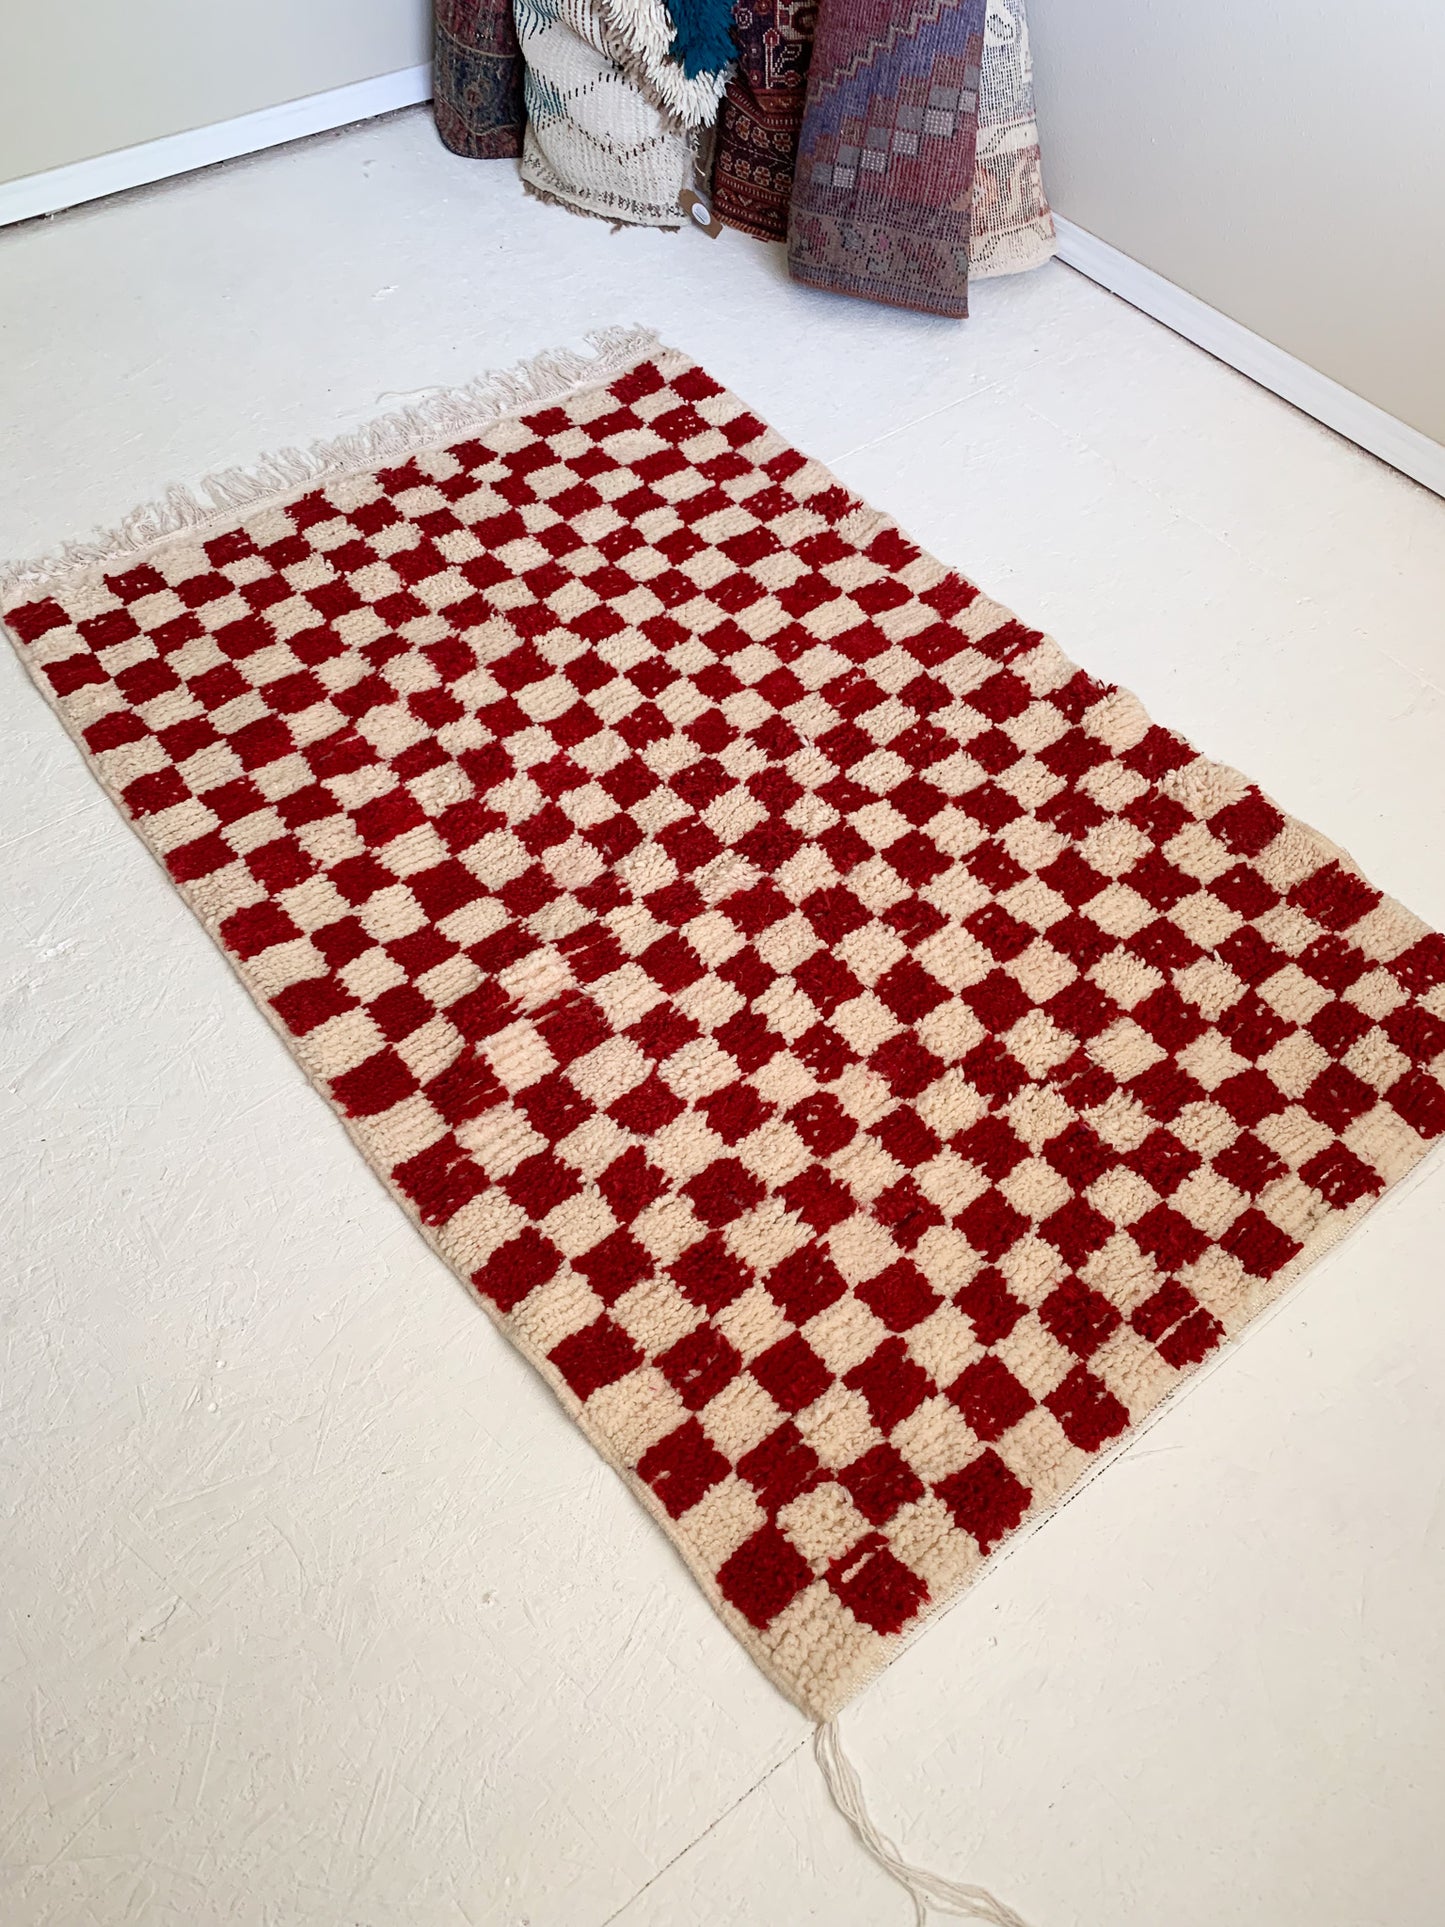 No. A1046 - 3.5' x 5.4' Red Checkered Moroccan Area Rug